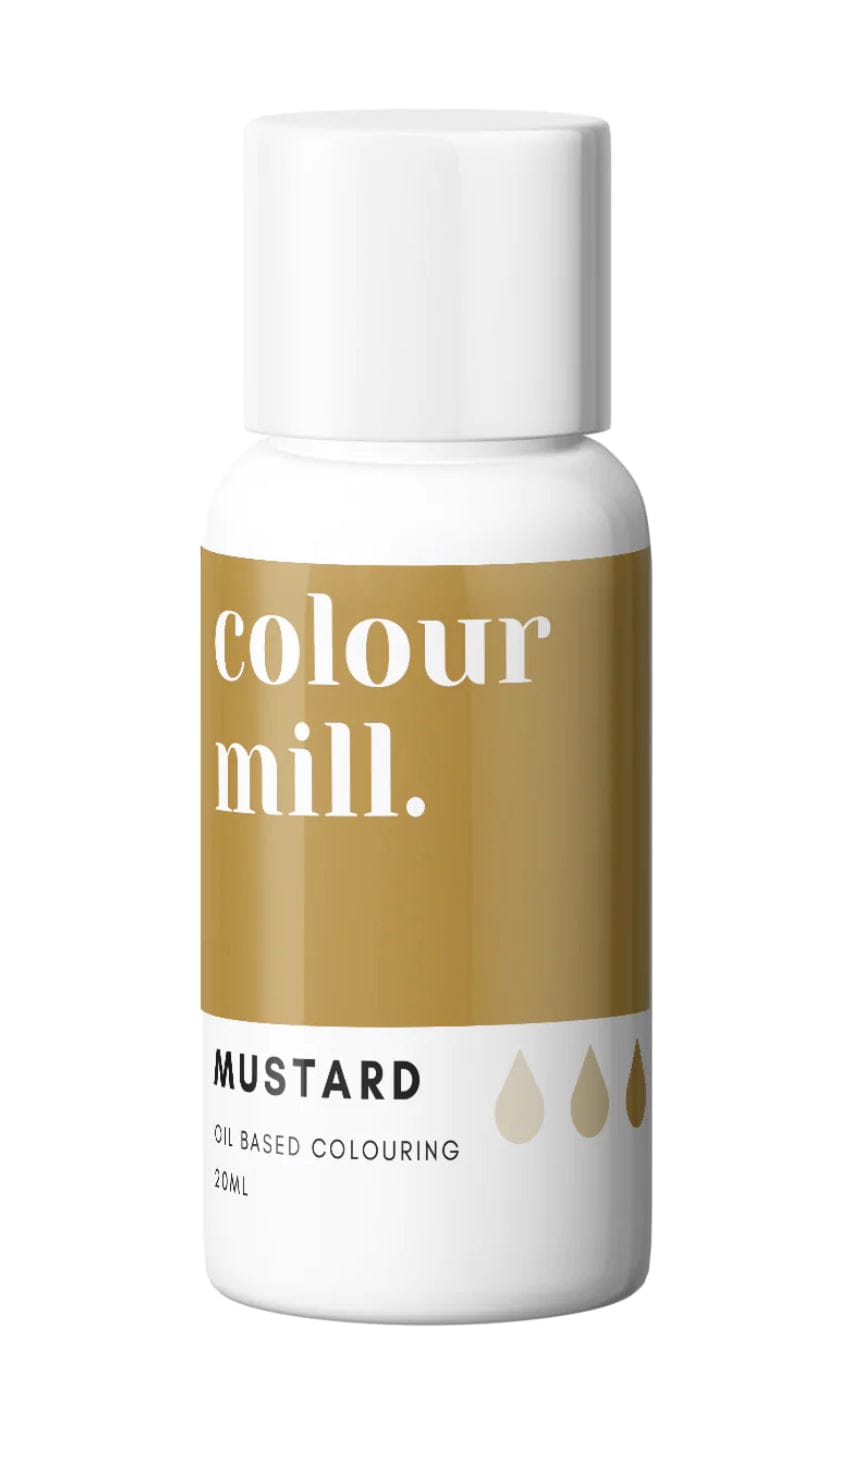 Colour Mill Mustard